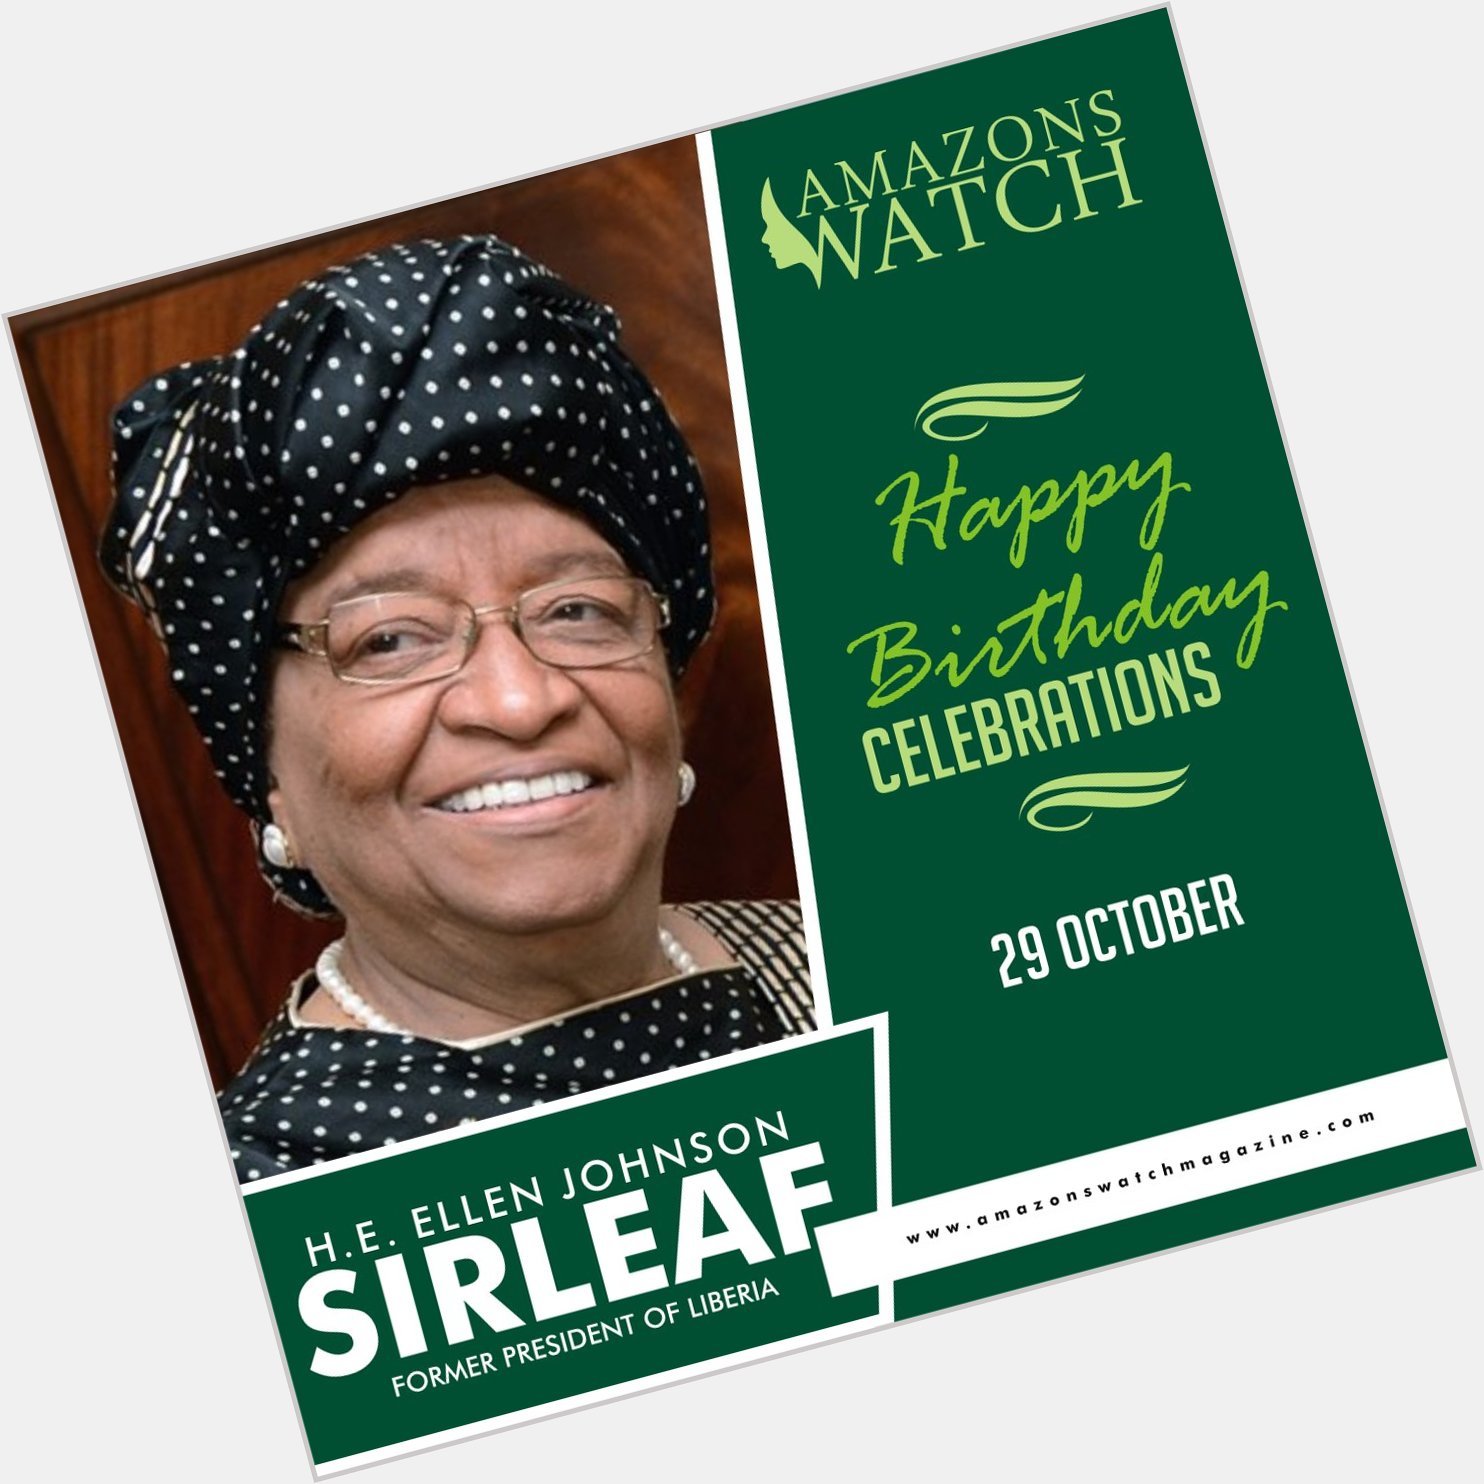 Happy Birthday to Her Excellency Ellen Johnson Sirleaf - Former President of Liberia. 